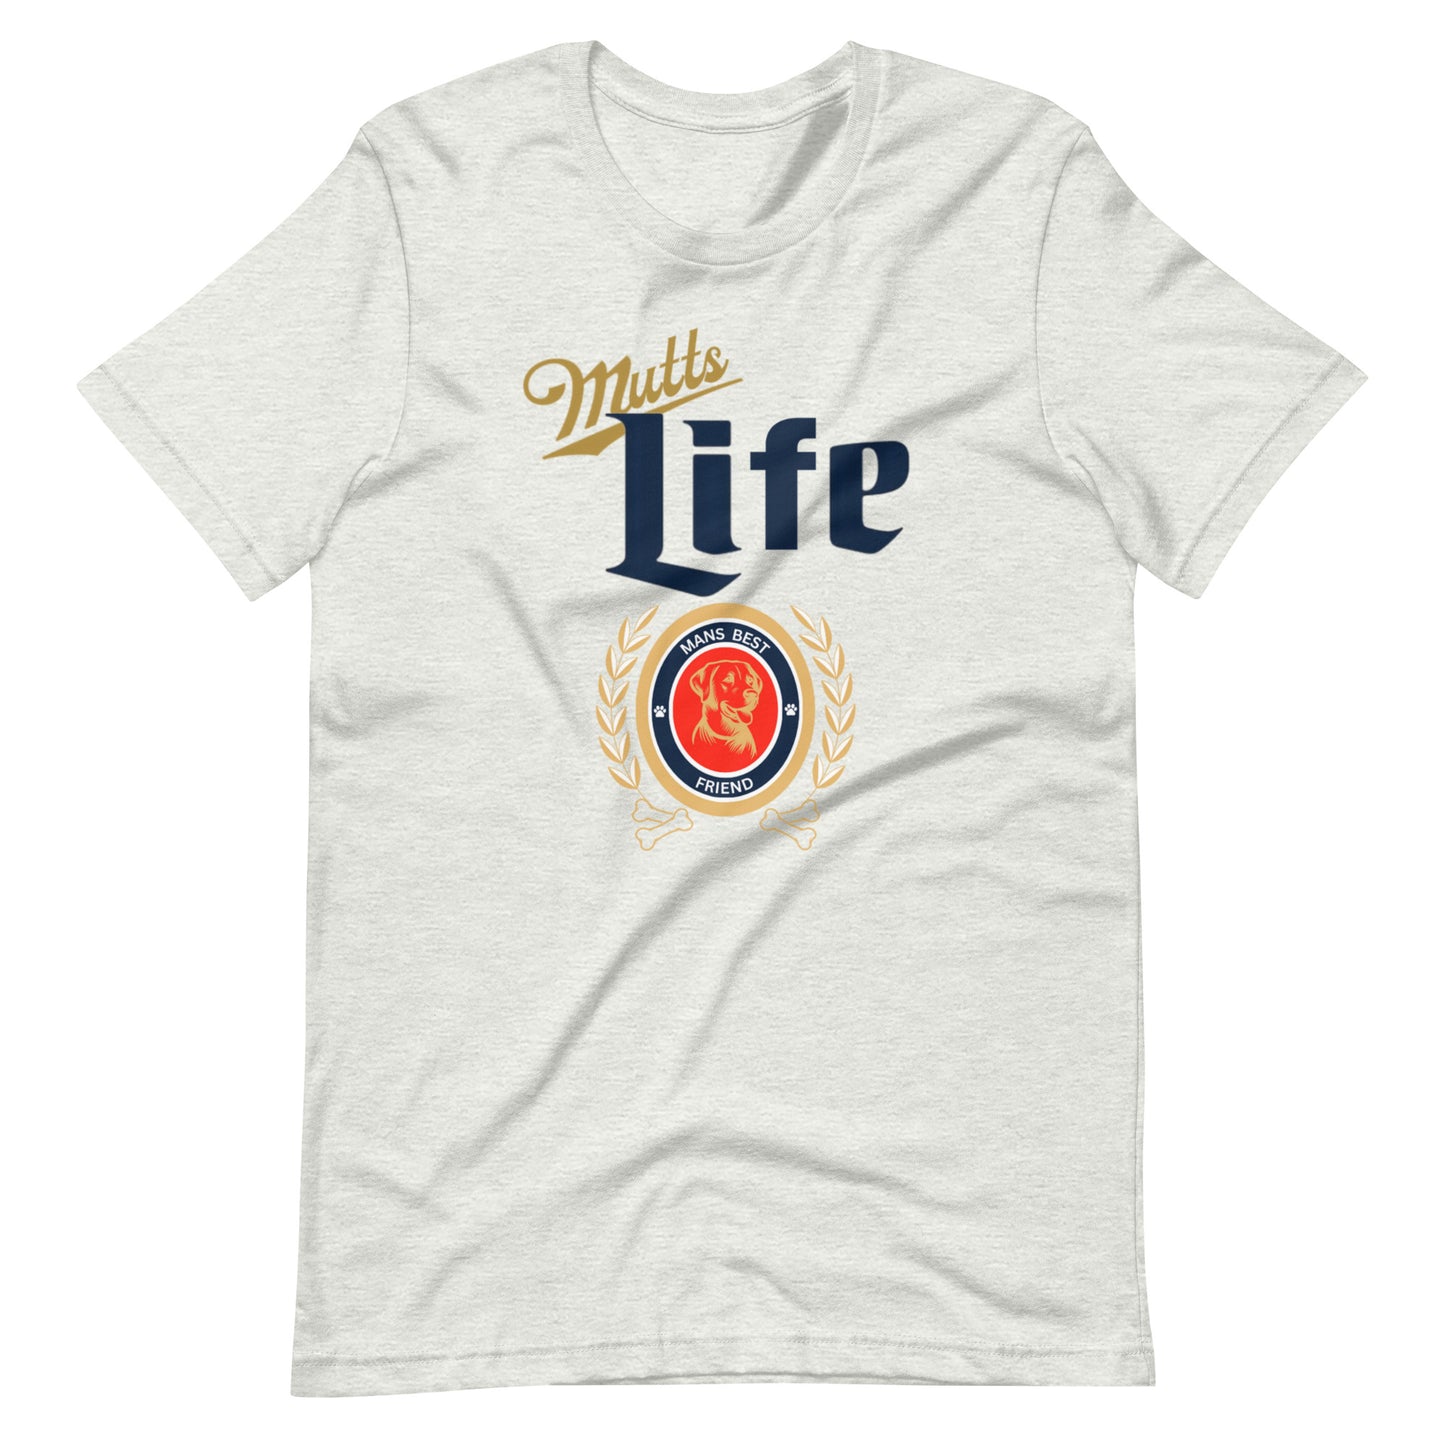 Mutts Life Unisex t-shirt